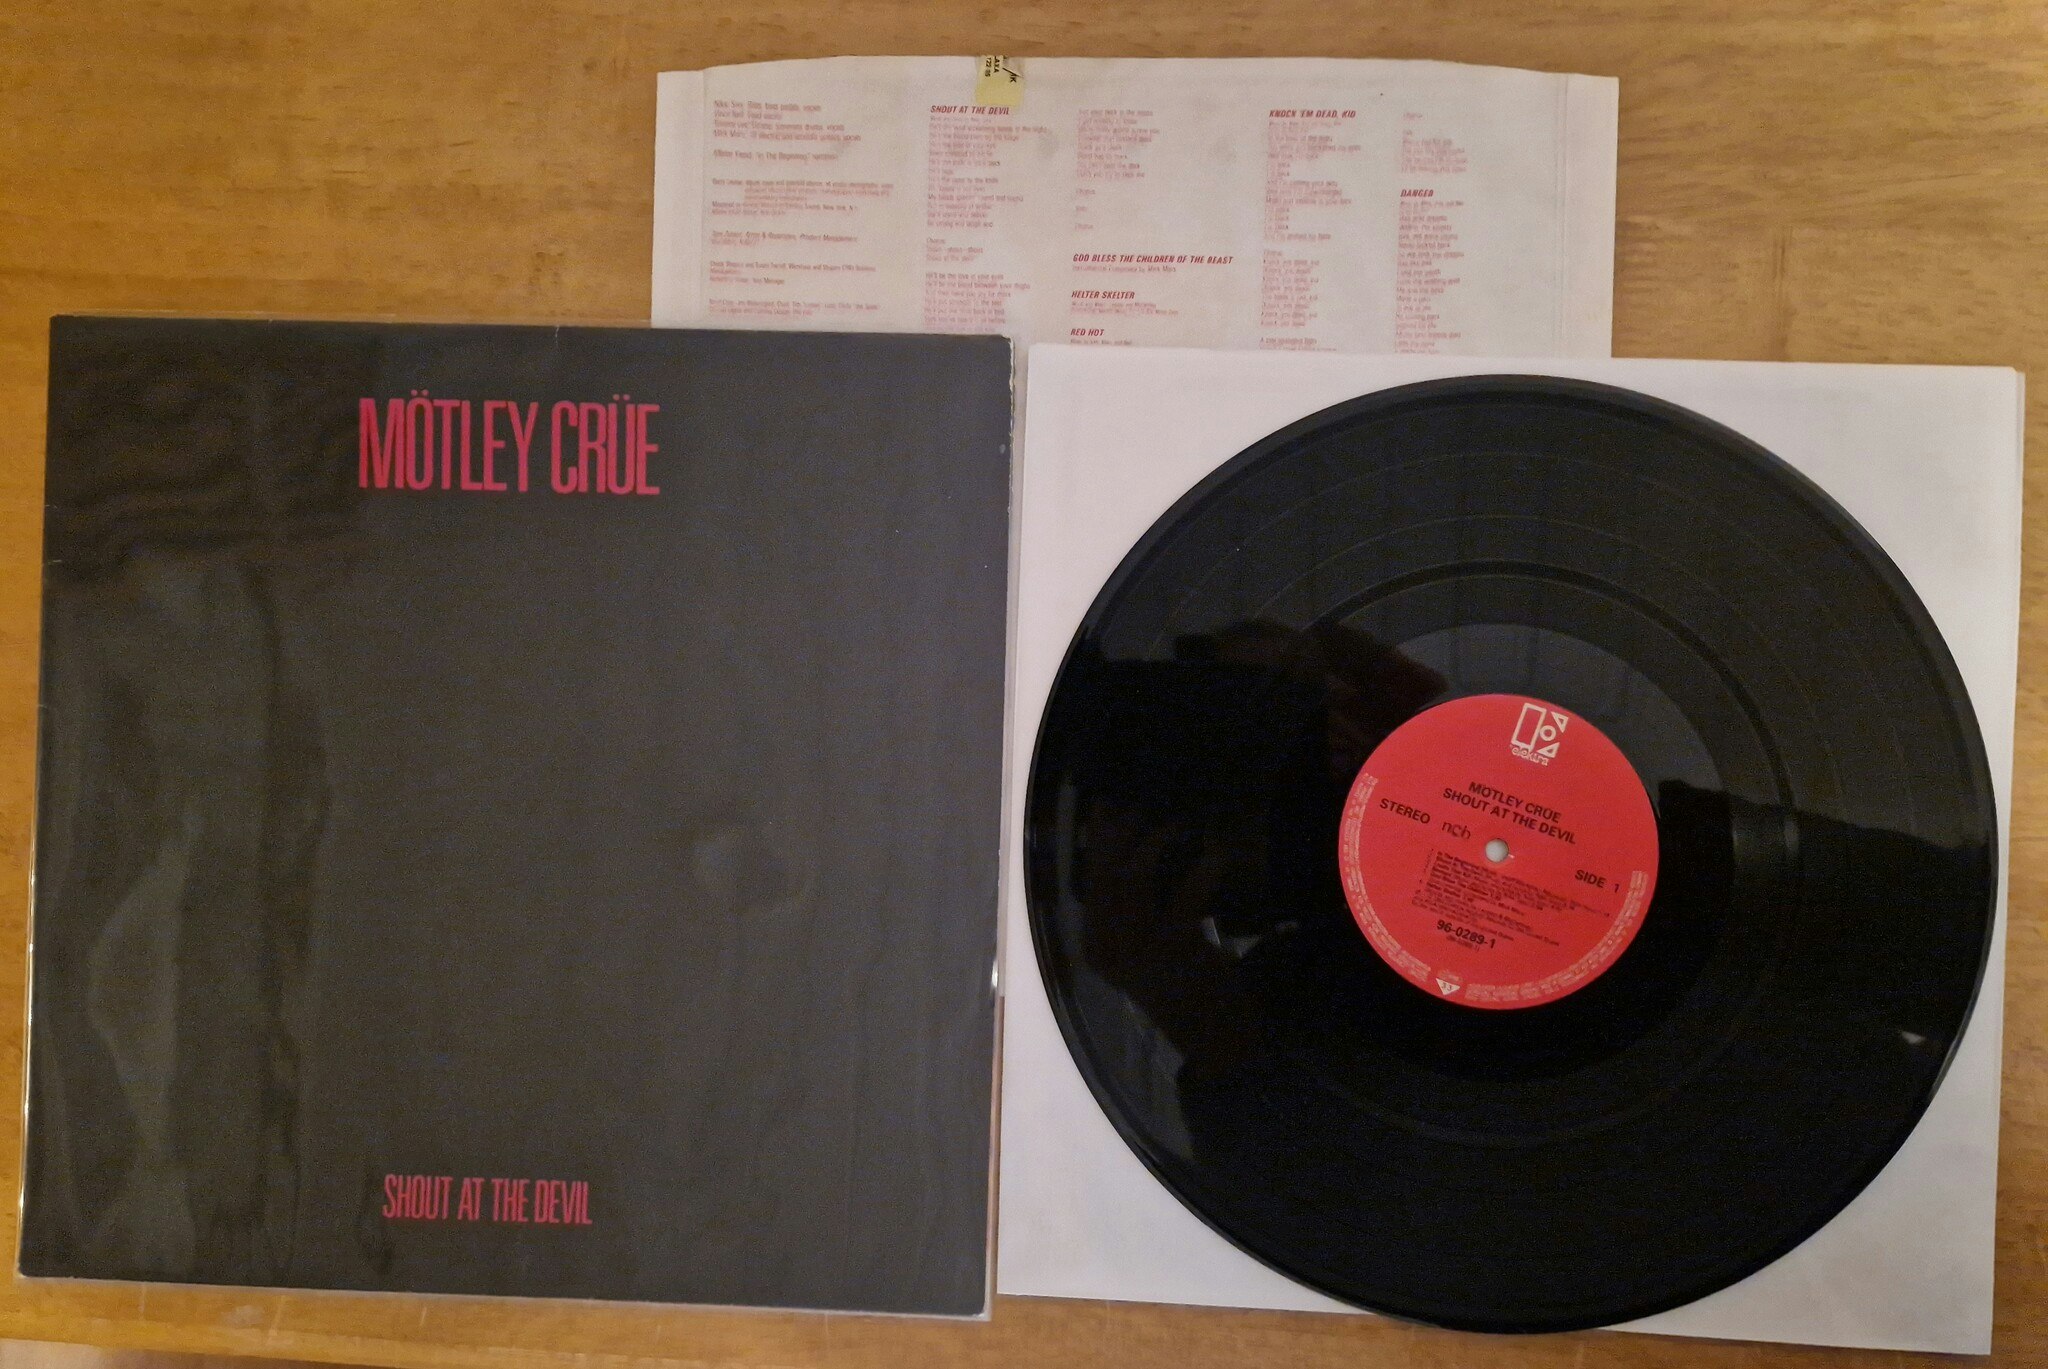 Mötley Crue, Shout at the devil. Vinyl LP